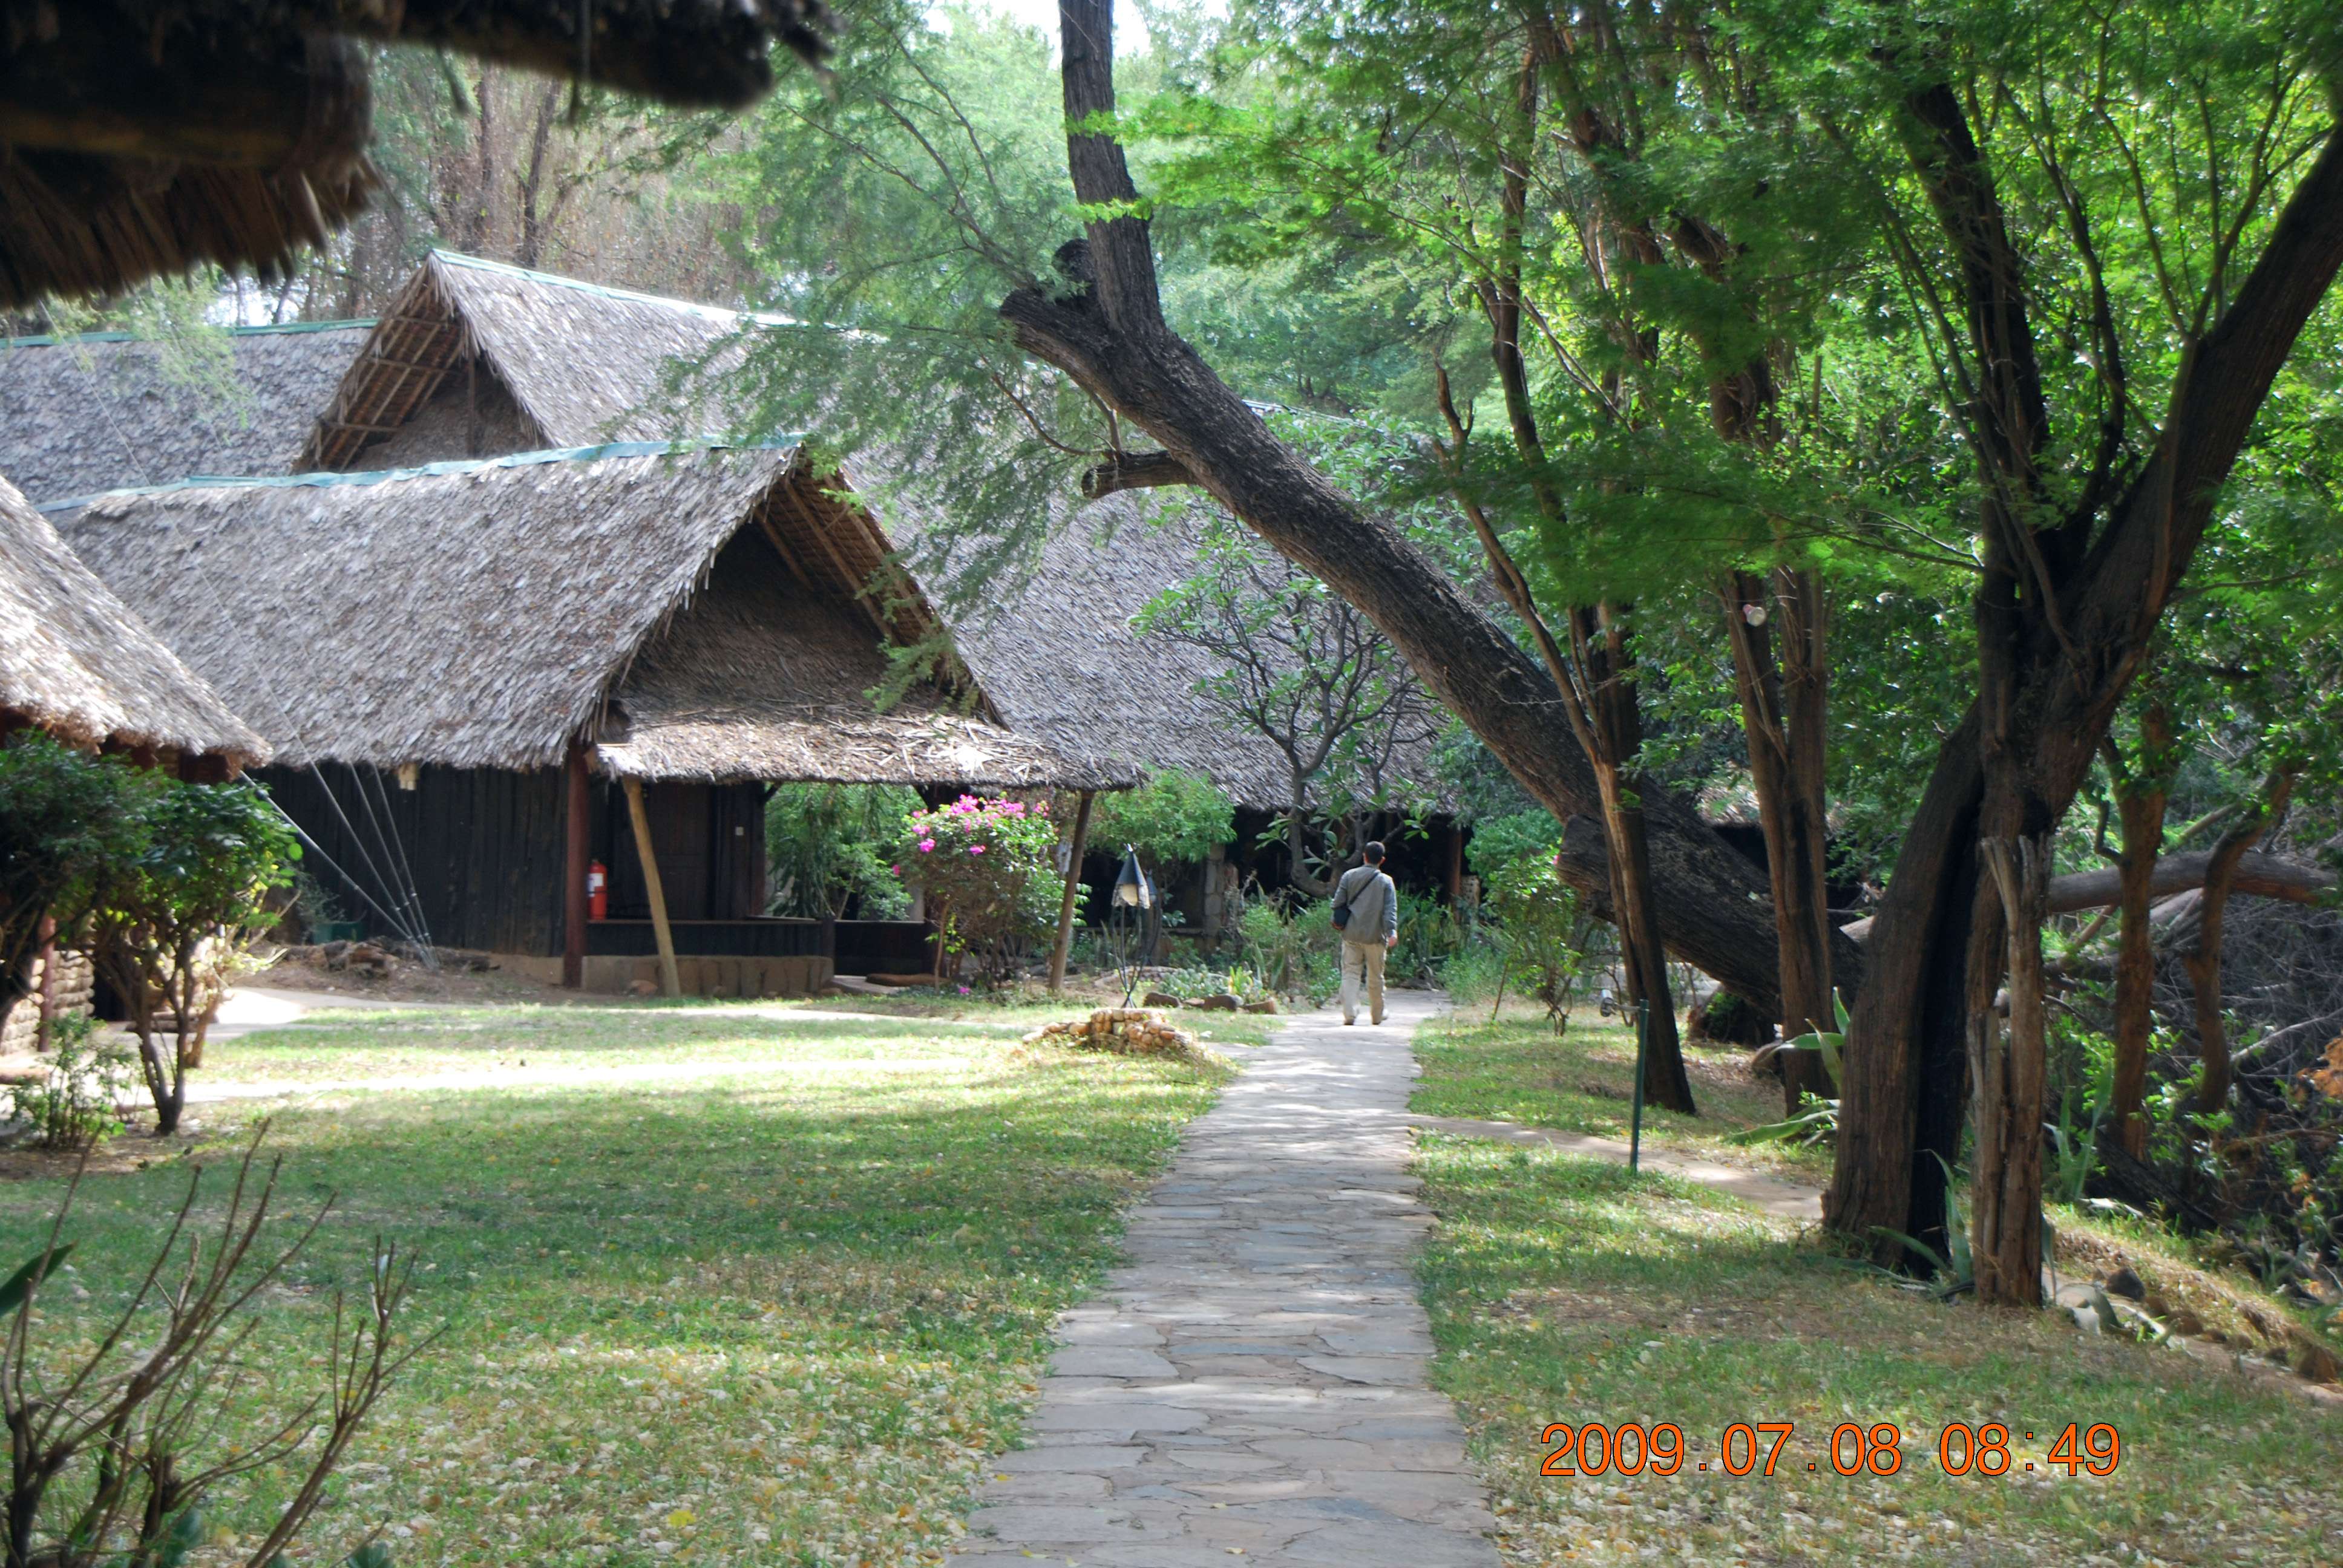 Kenia una experiencia inolvidable - Blogs de Kenia - Samburu (2)